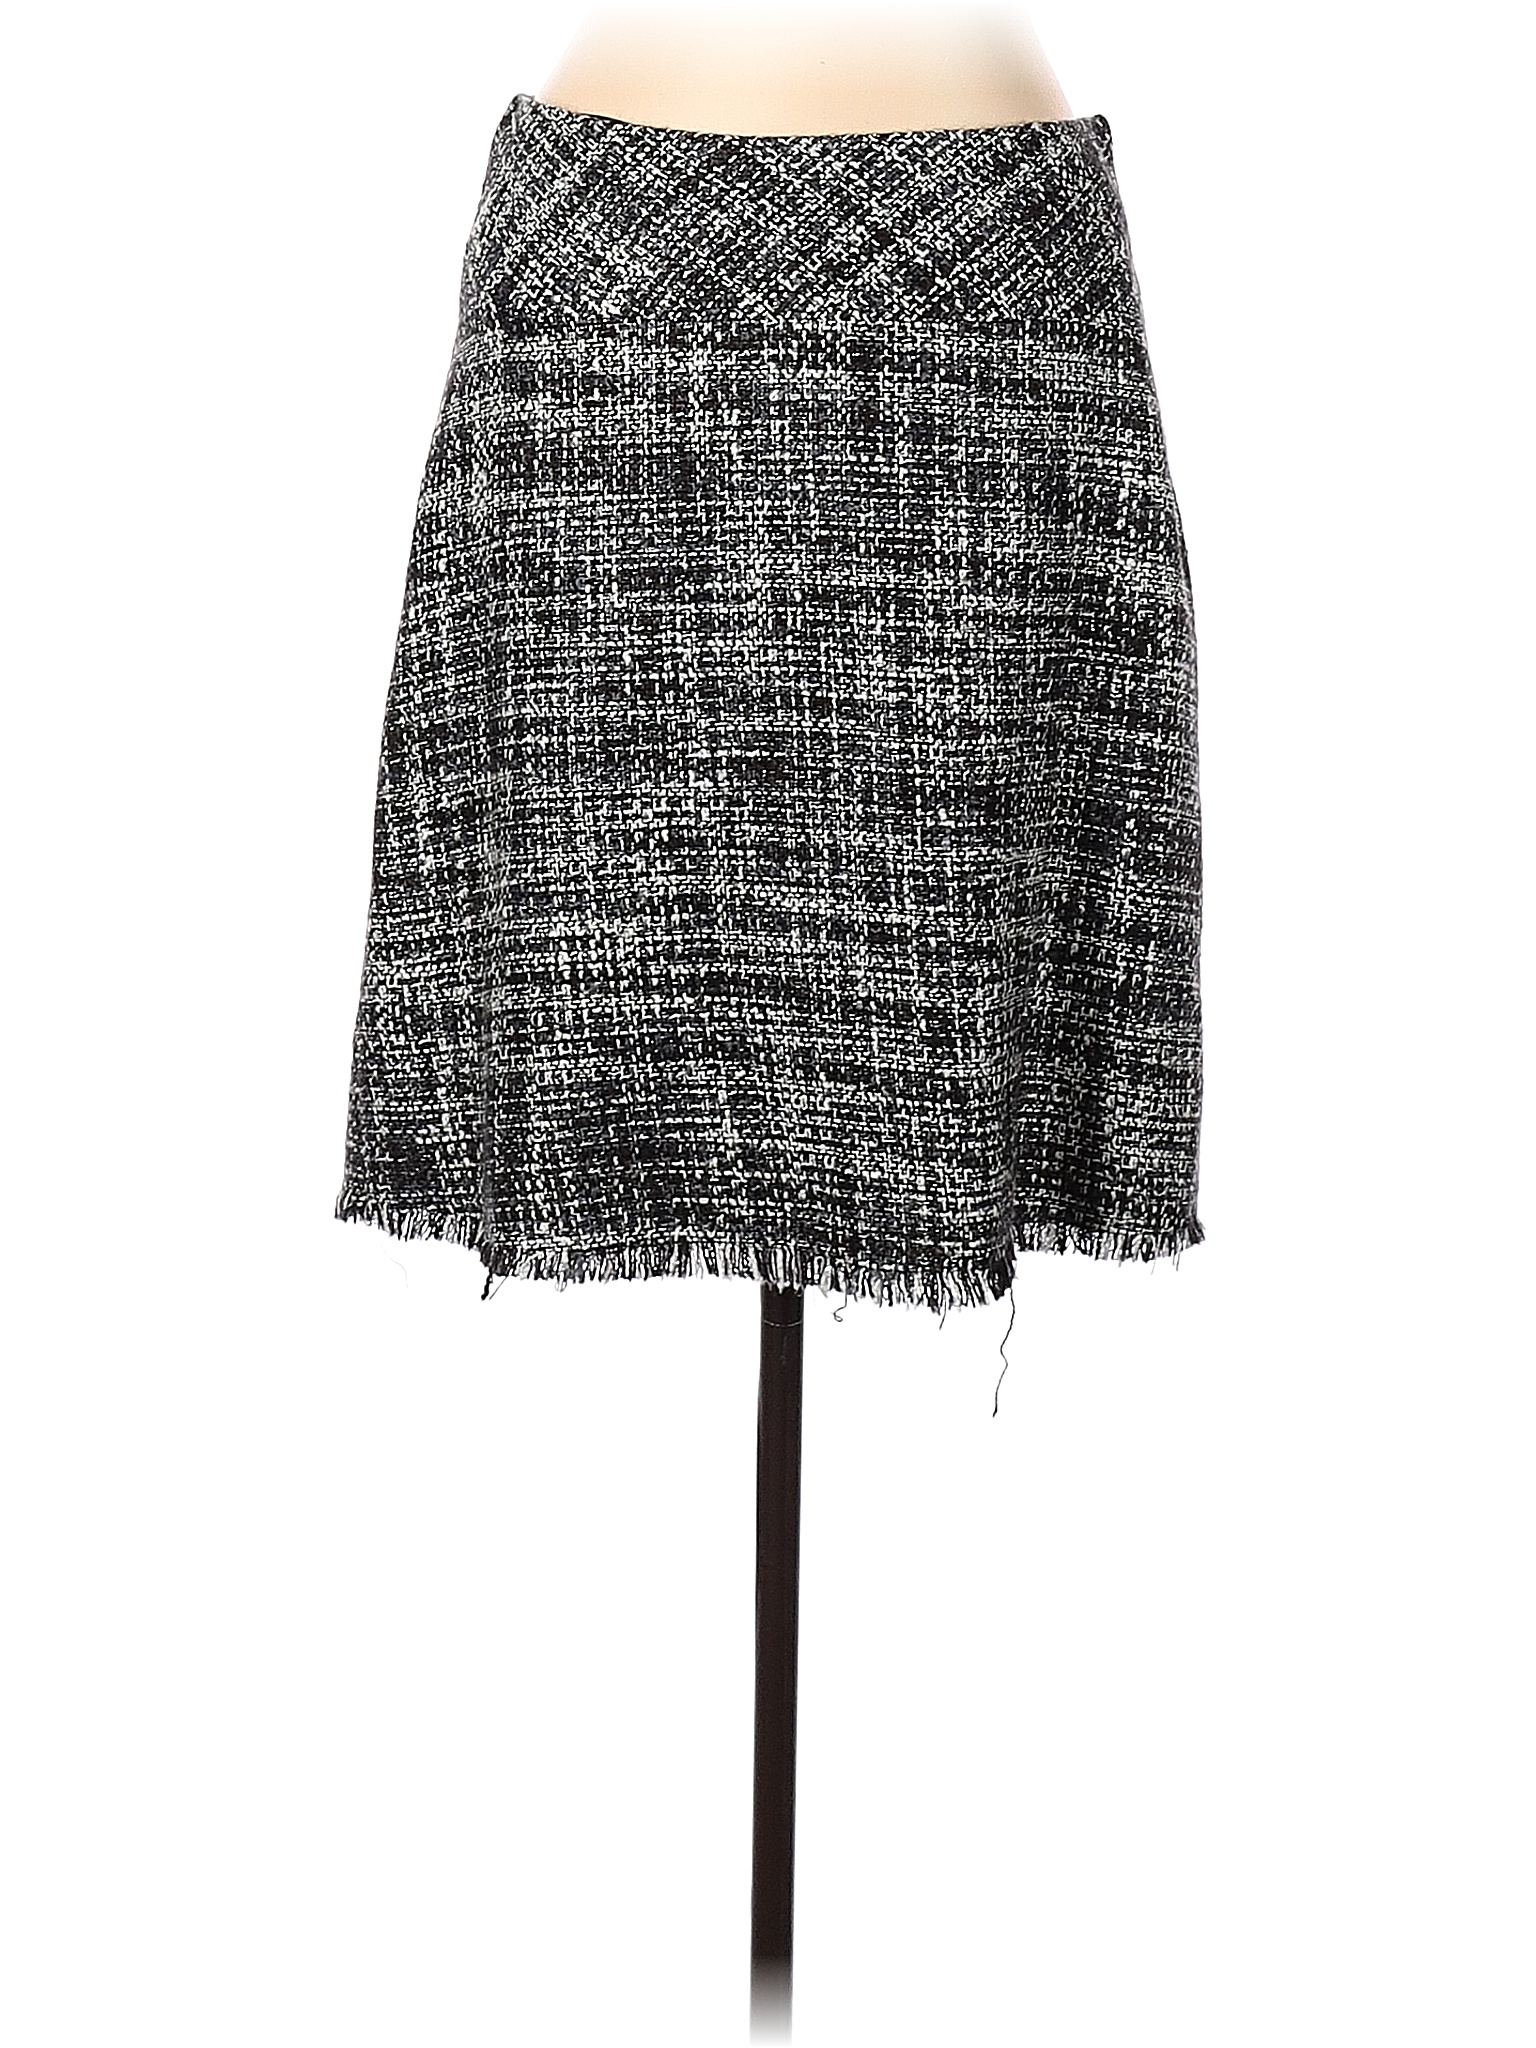 Newport News Tweed Marled Multi Color Black Casual Skirt Size 12 - 71% ...